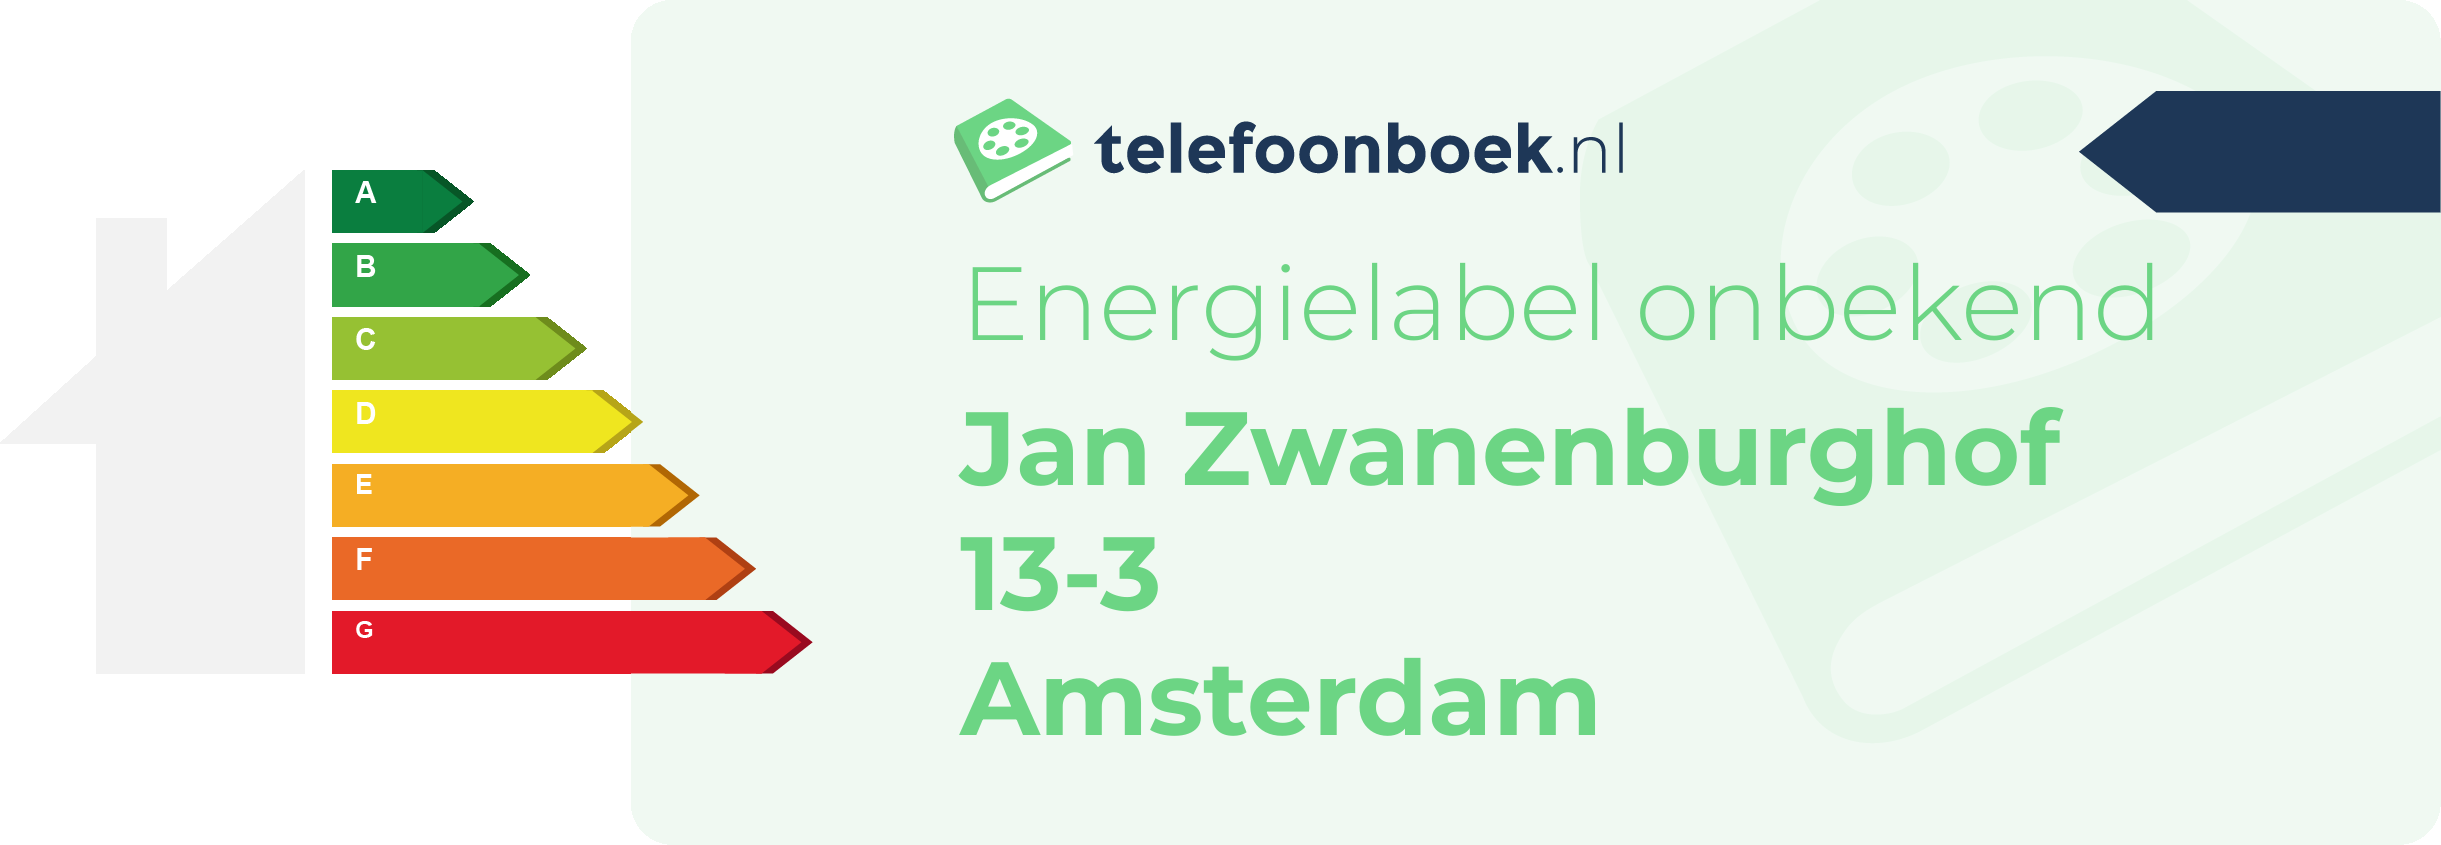 Energielabel Jan Zwanenburghof 13-3 Amsterdam